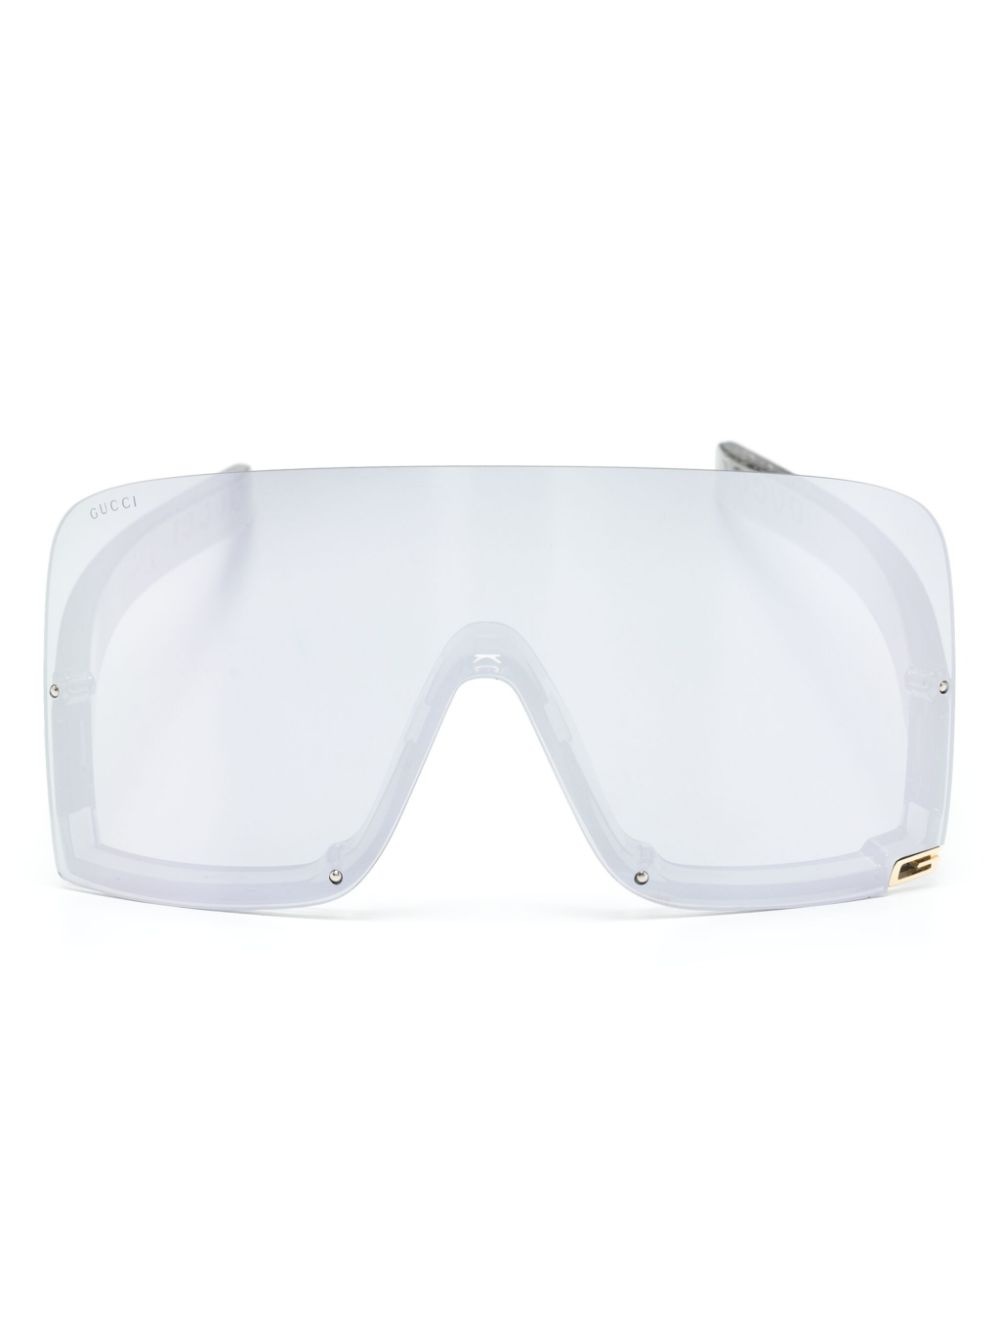 mask-frame sunglasses - 1